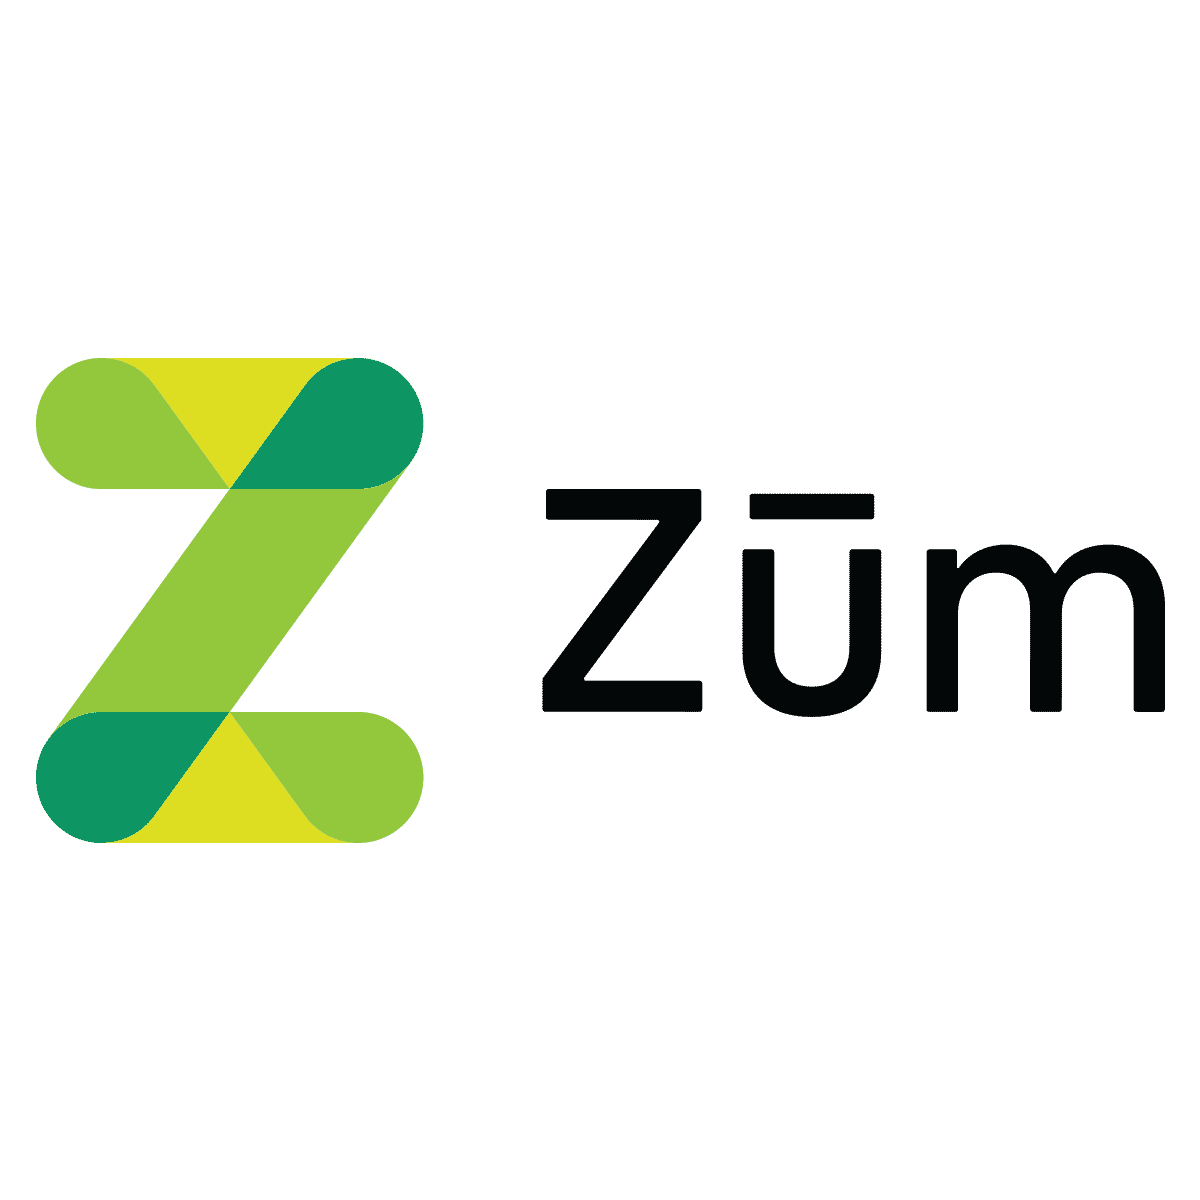 Zum Statistics and Facts 2022